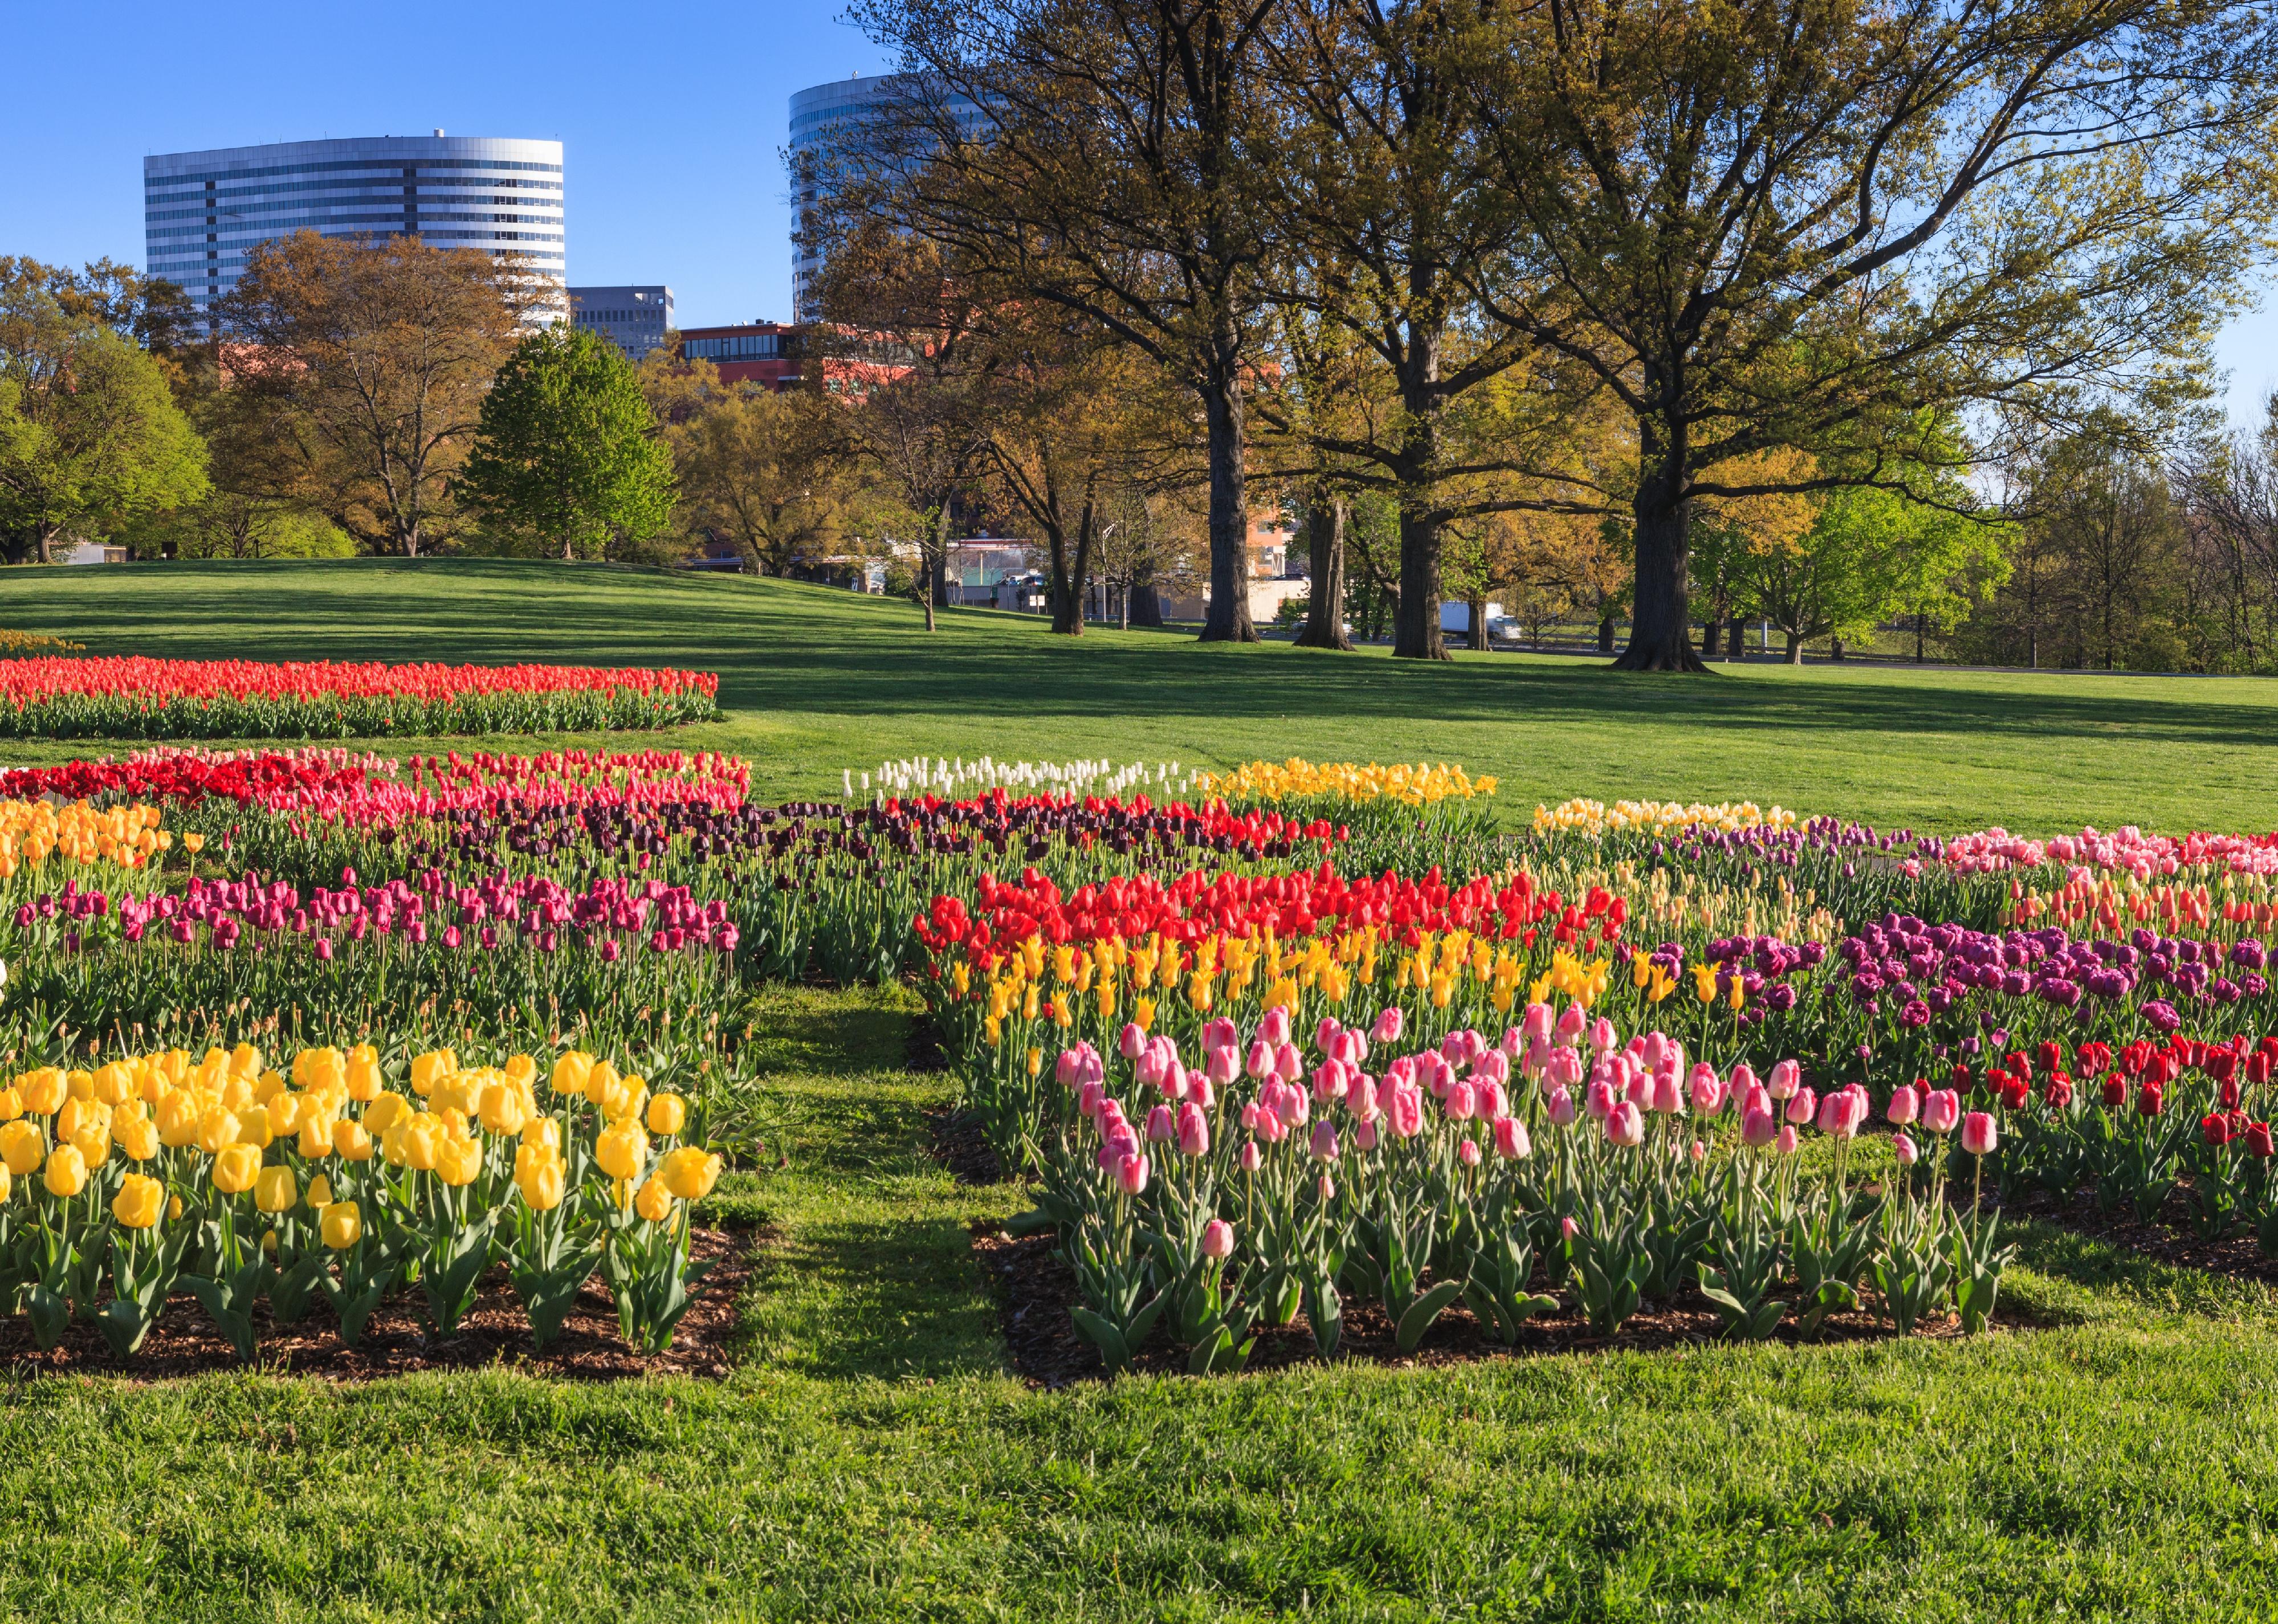 View of the tulip gardens at Arlington Ridge Park.